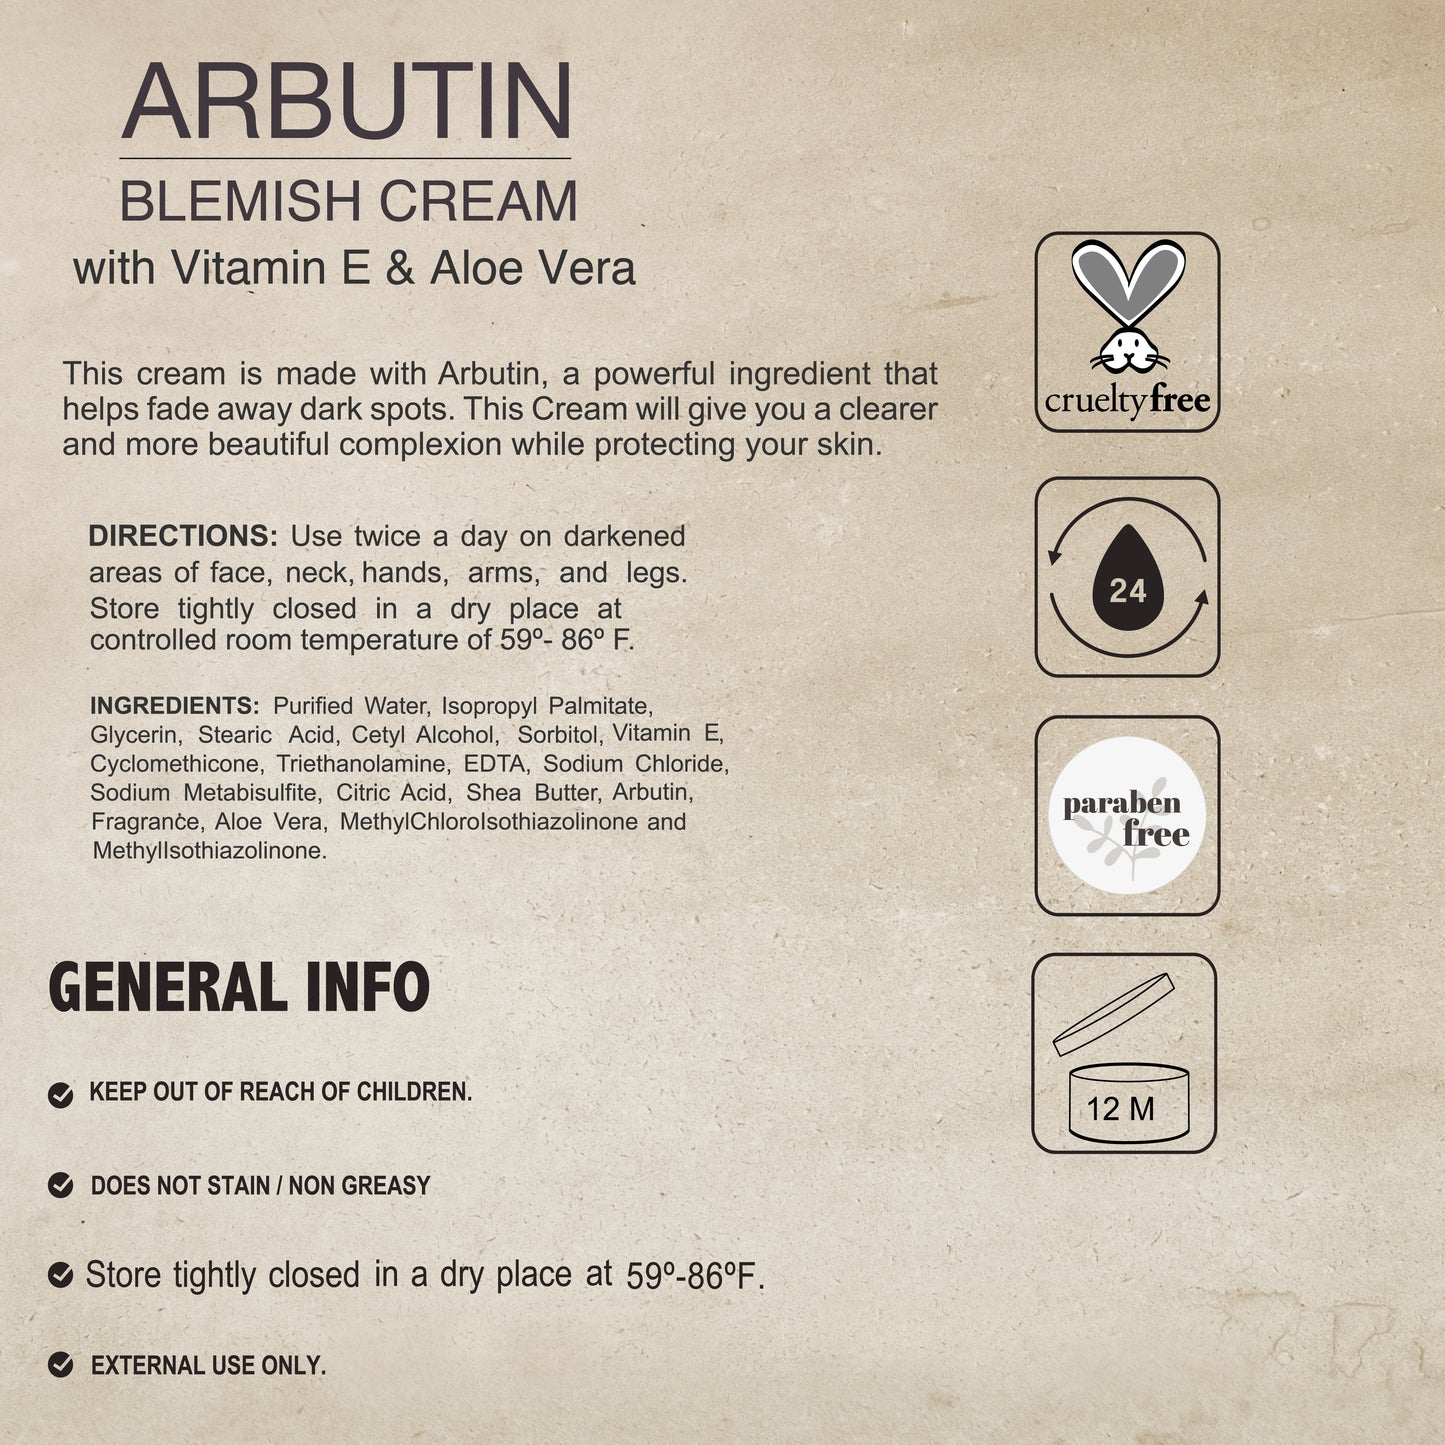 Arbutin Cream by Lawrens Cosmetics 4 oz - Master Case 48